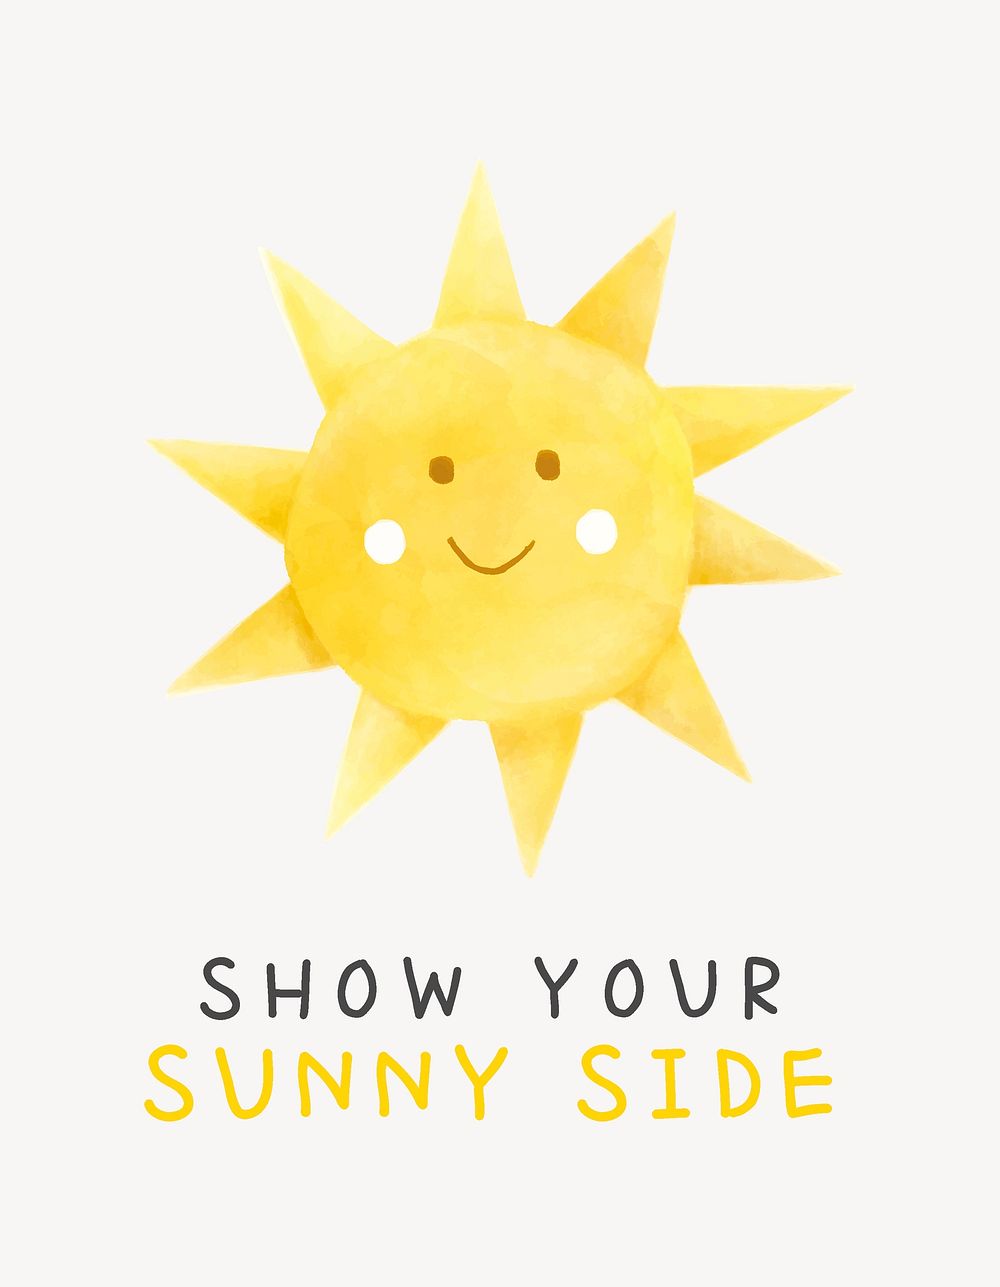 Cute sun flyer template, watercolor design vector